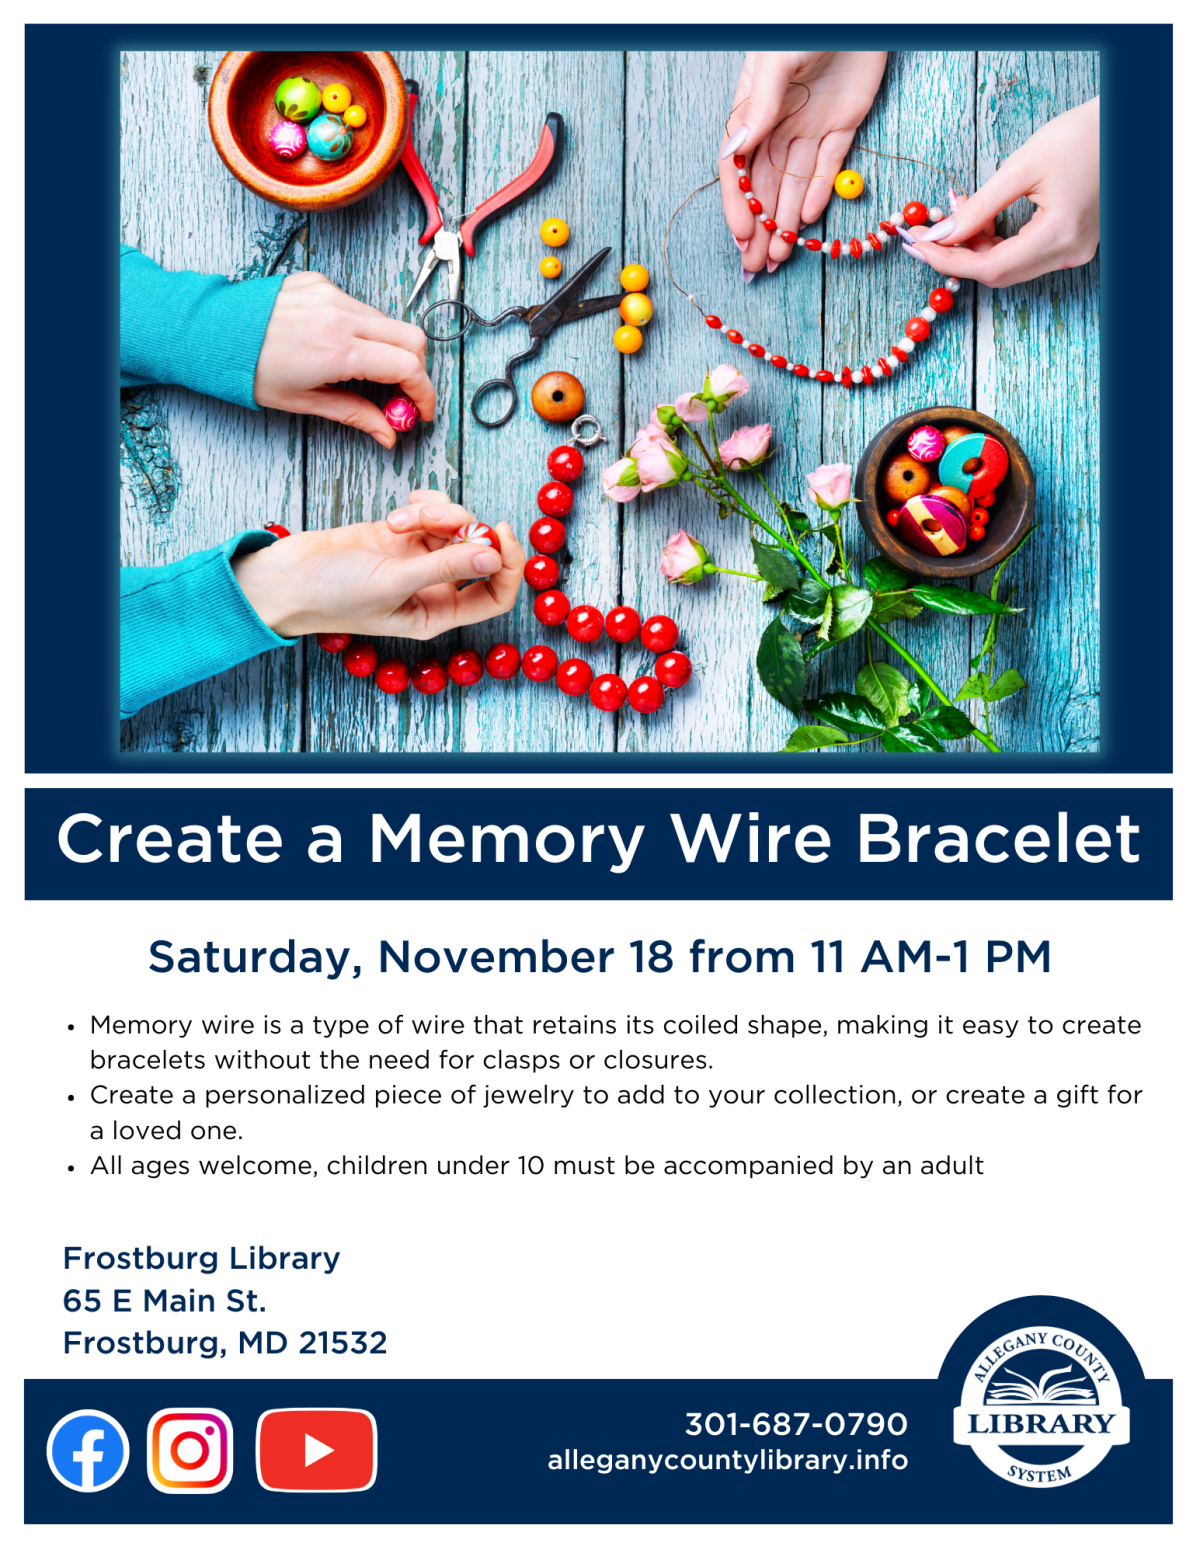 Frostburg Memory Wire Bracelet Craft. Read description for more information